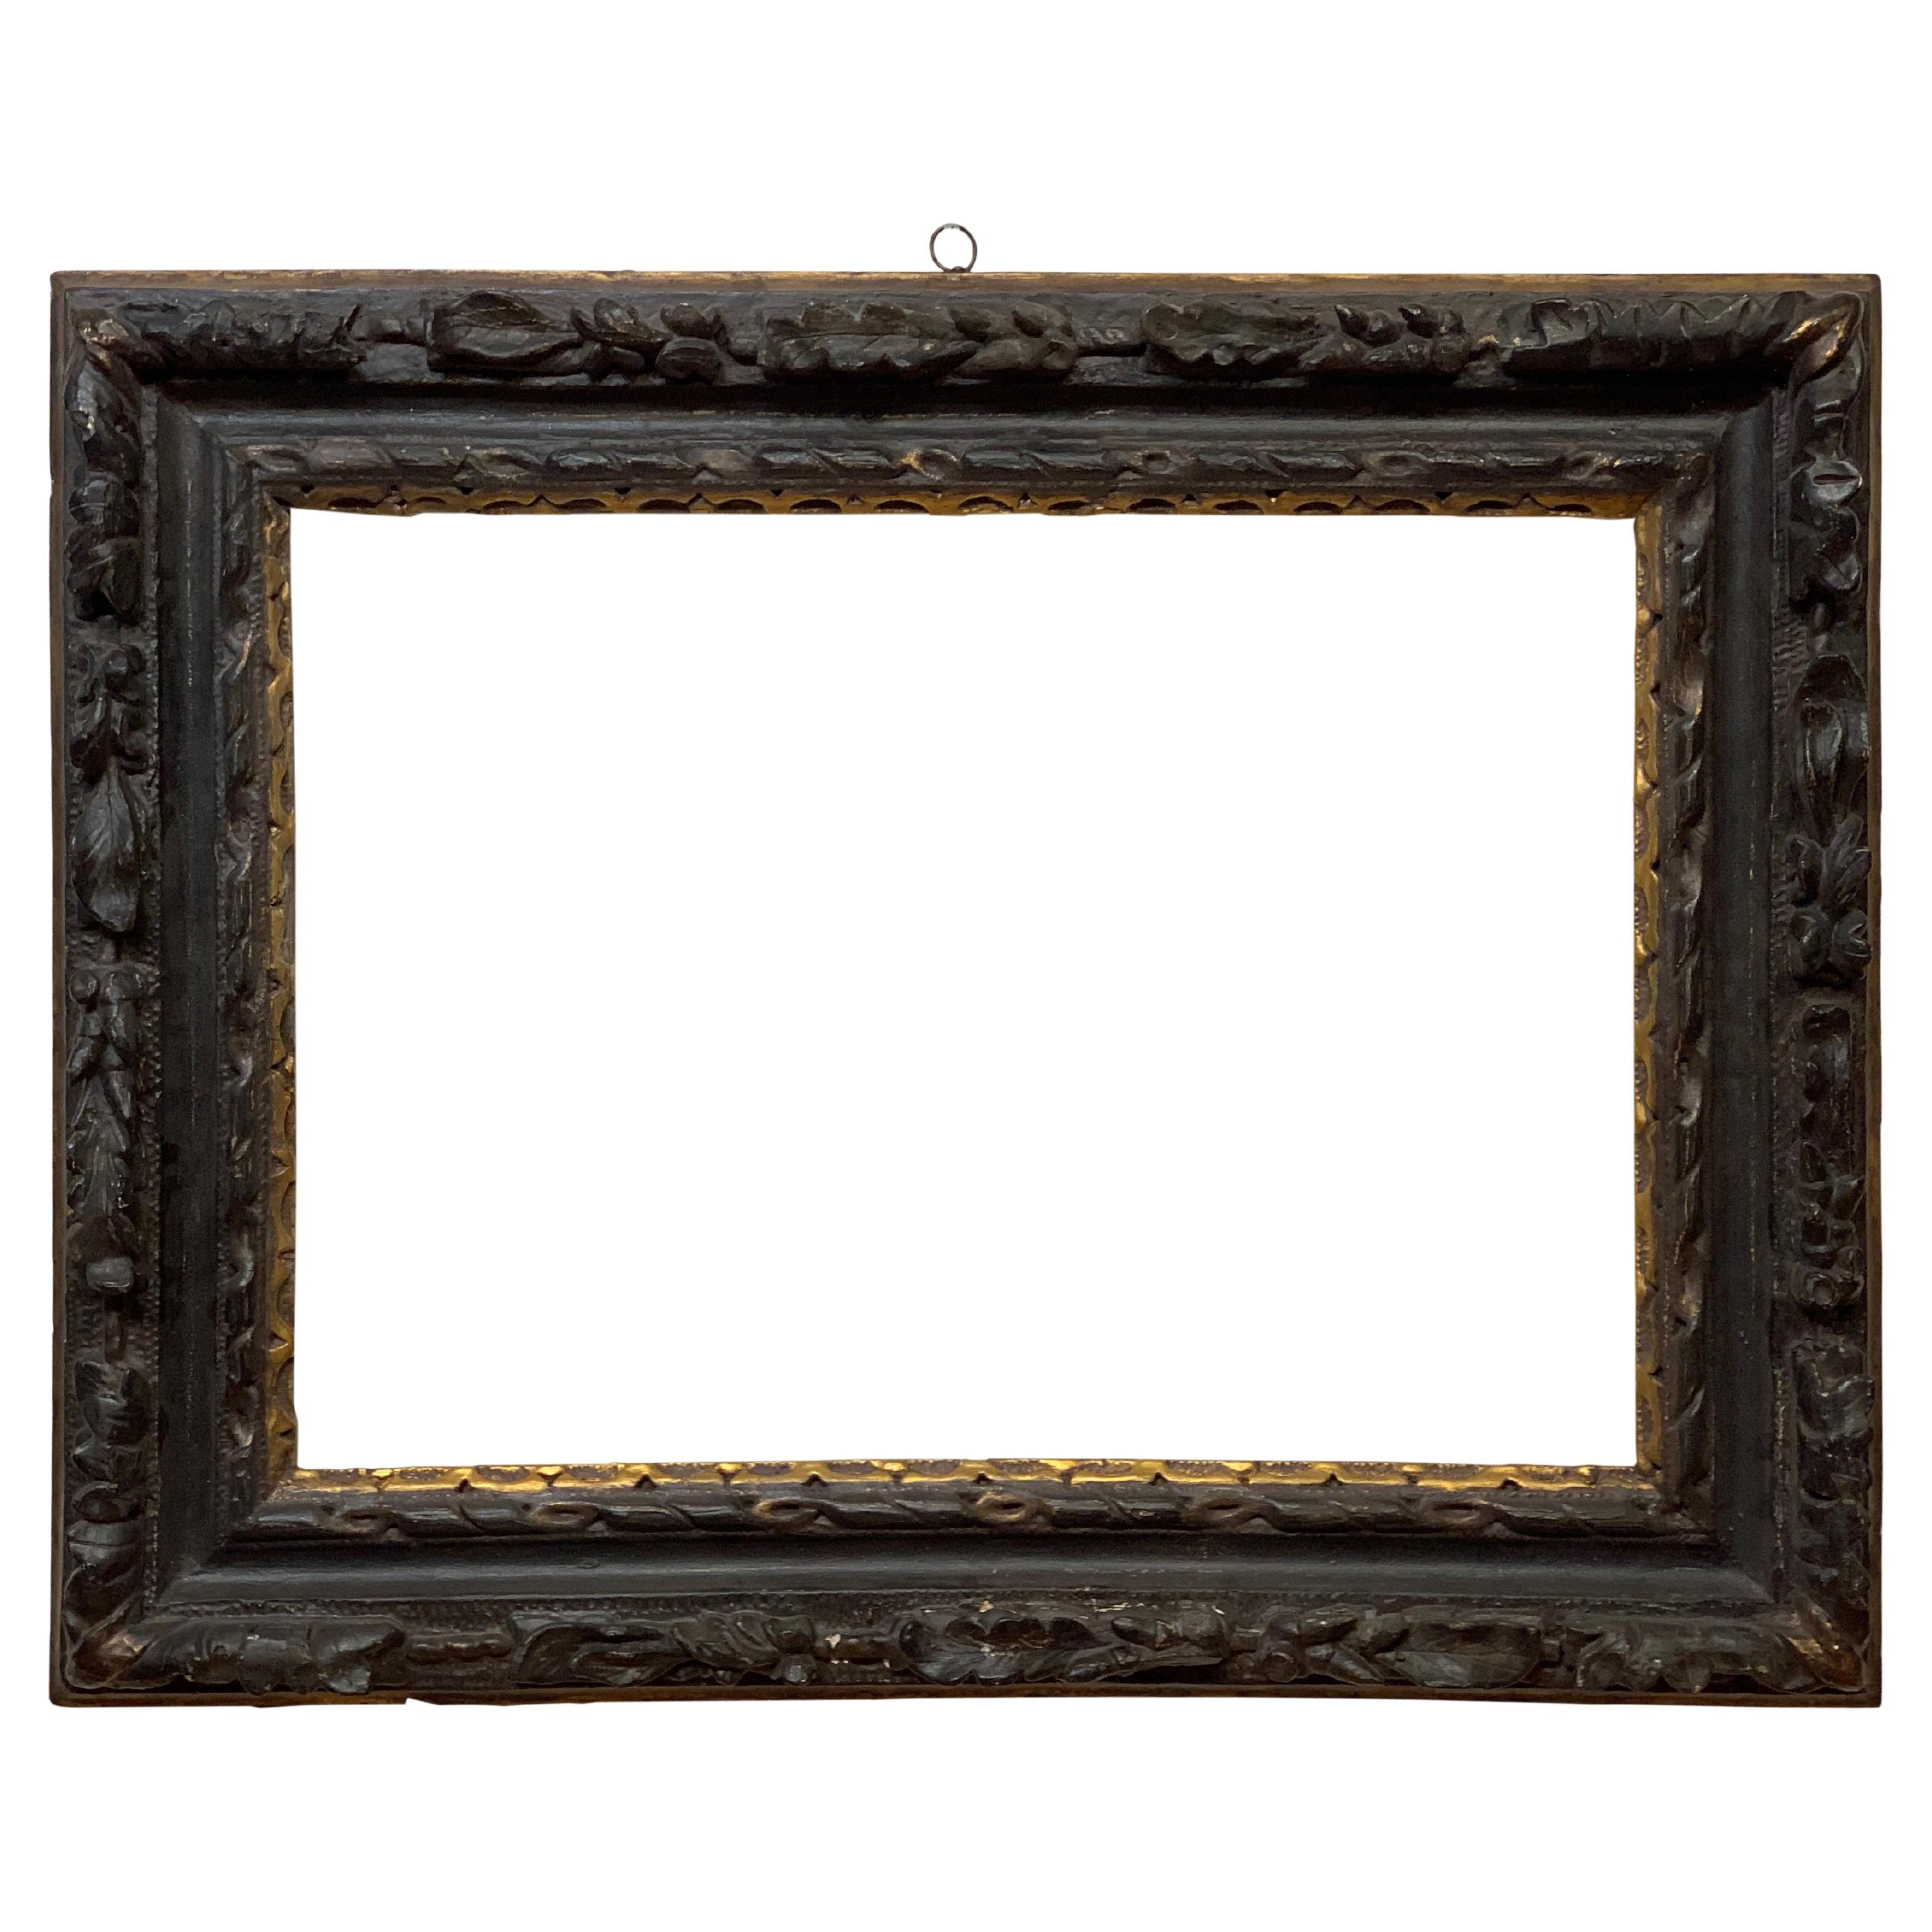 English 19x24 inch Lely Ebonized Parcel Gilt Picture Frame circa 1710